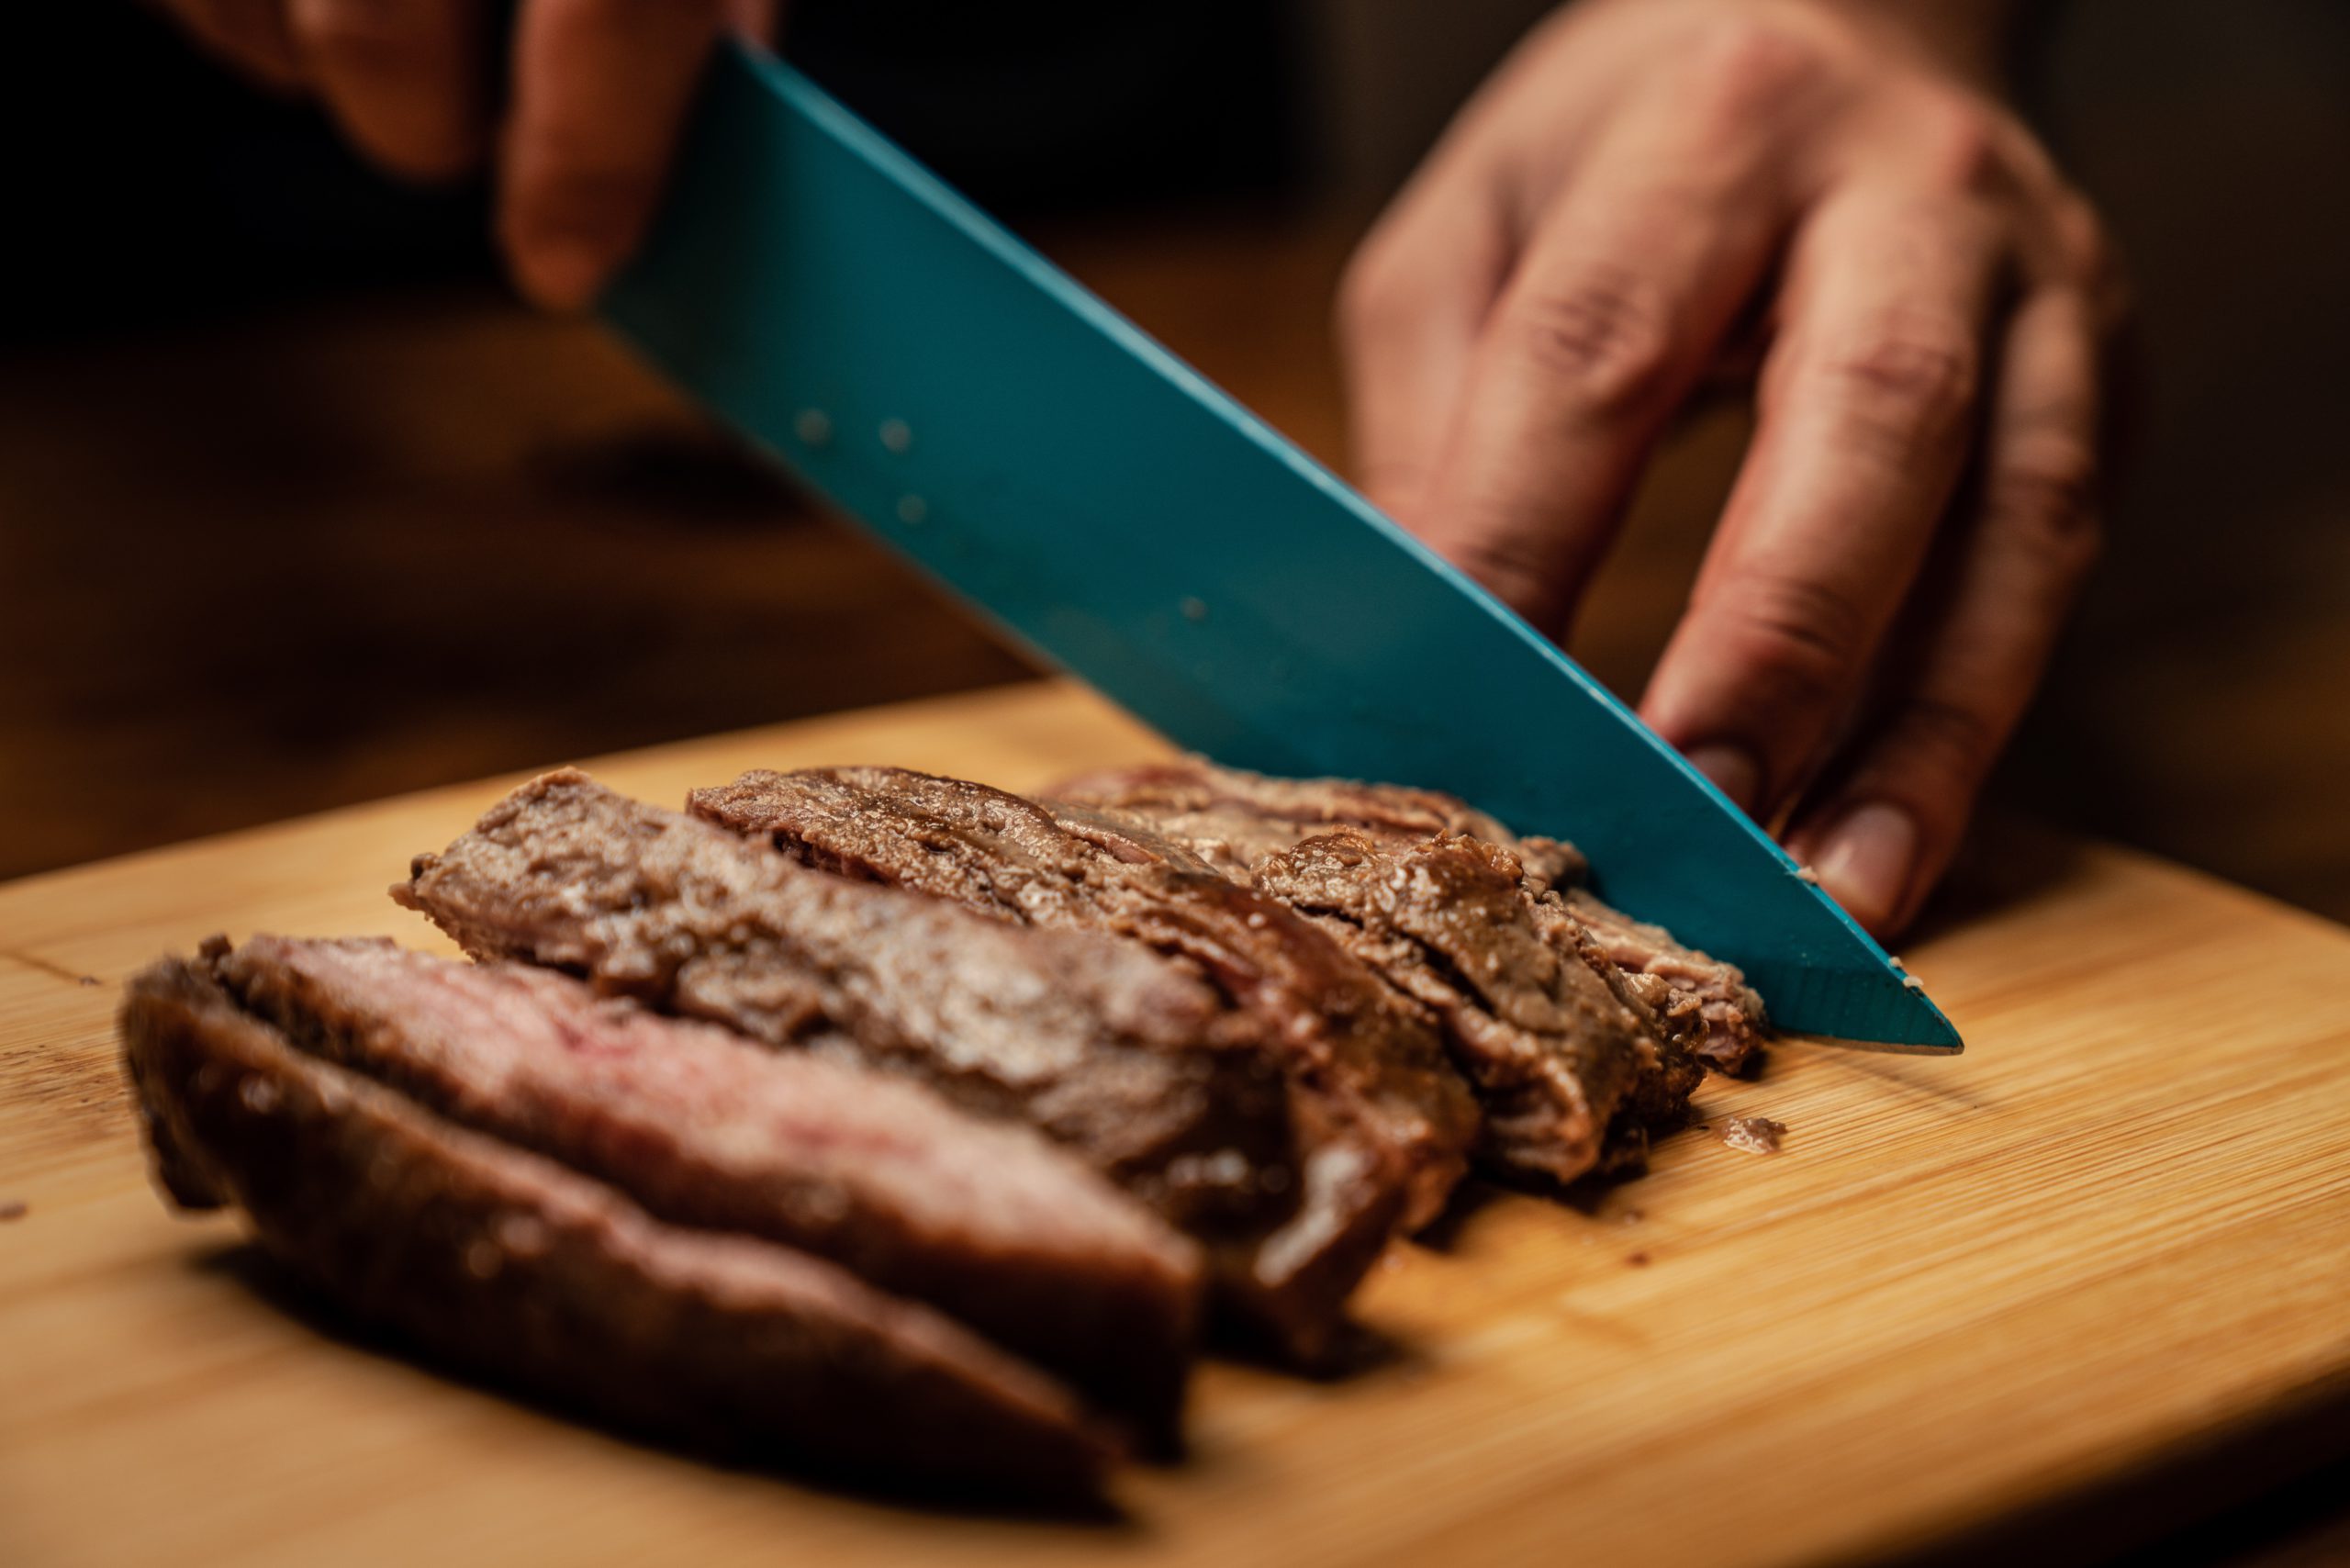 Piece of steak being cut on a cutting board